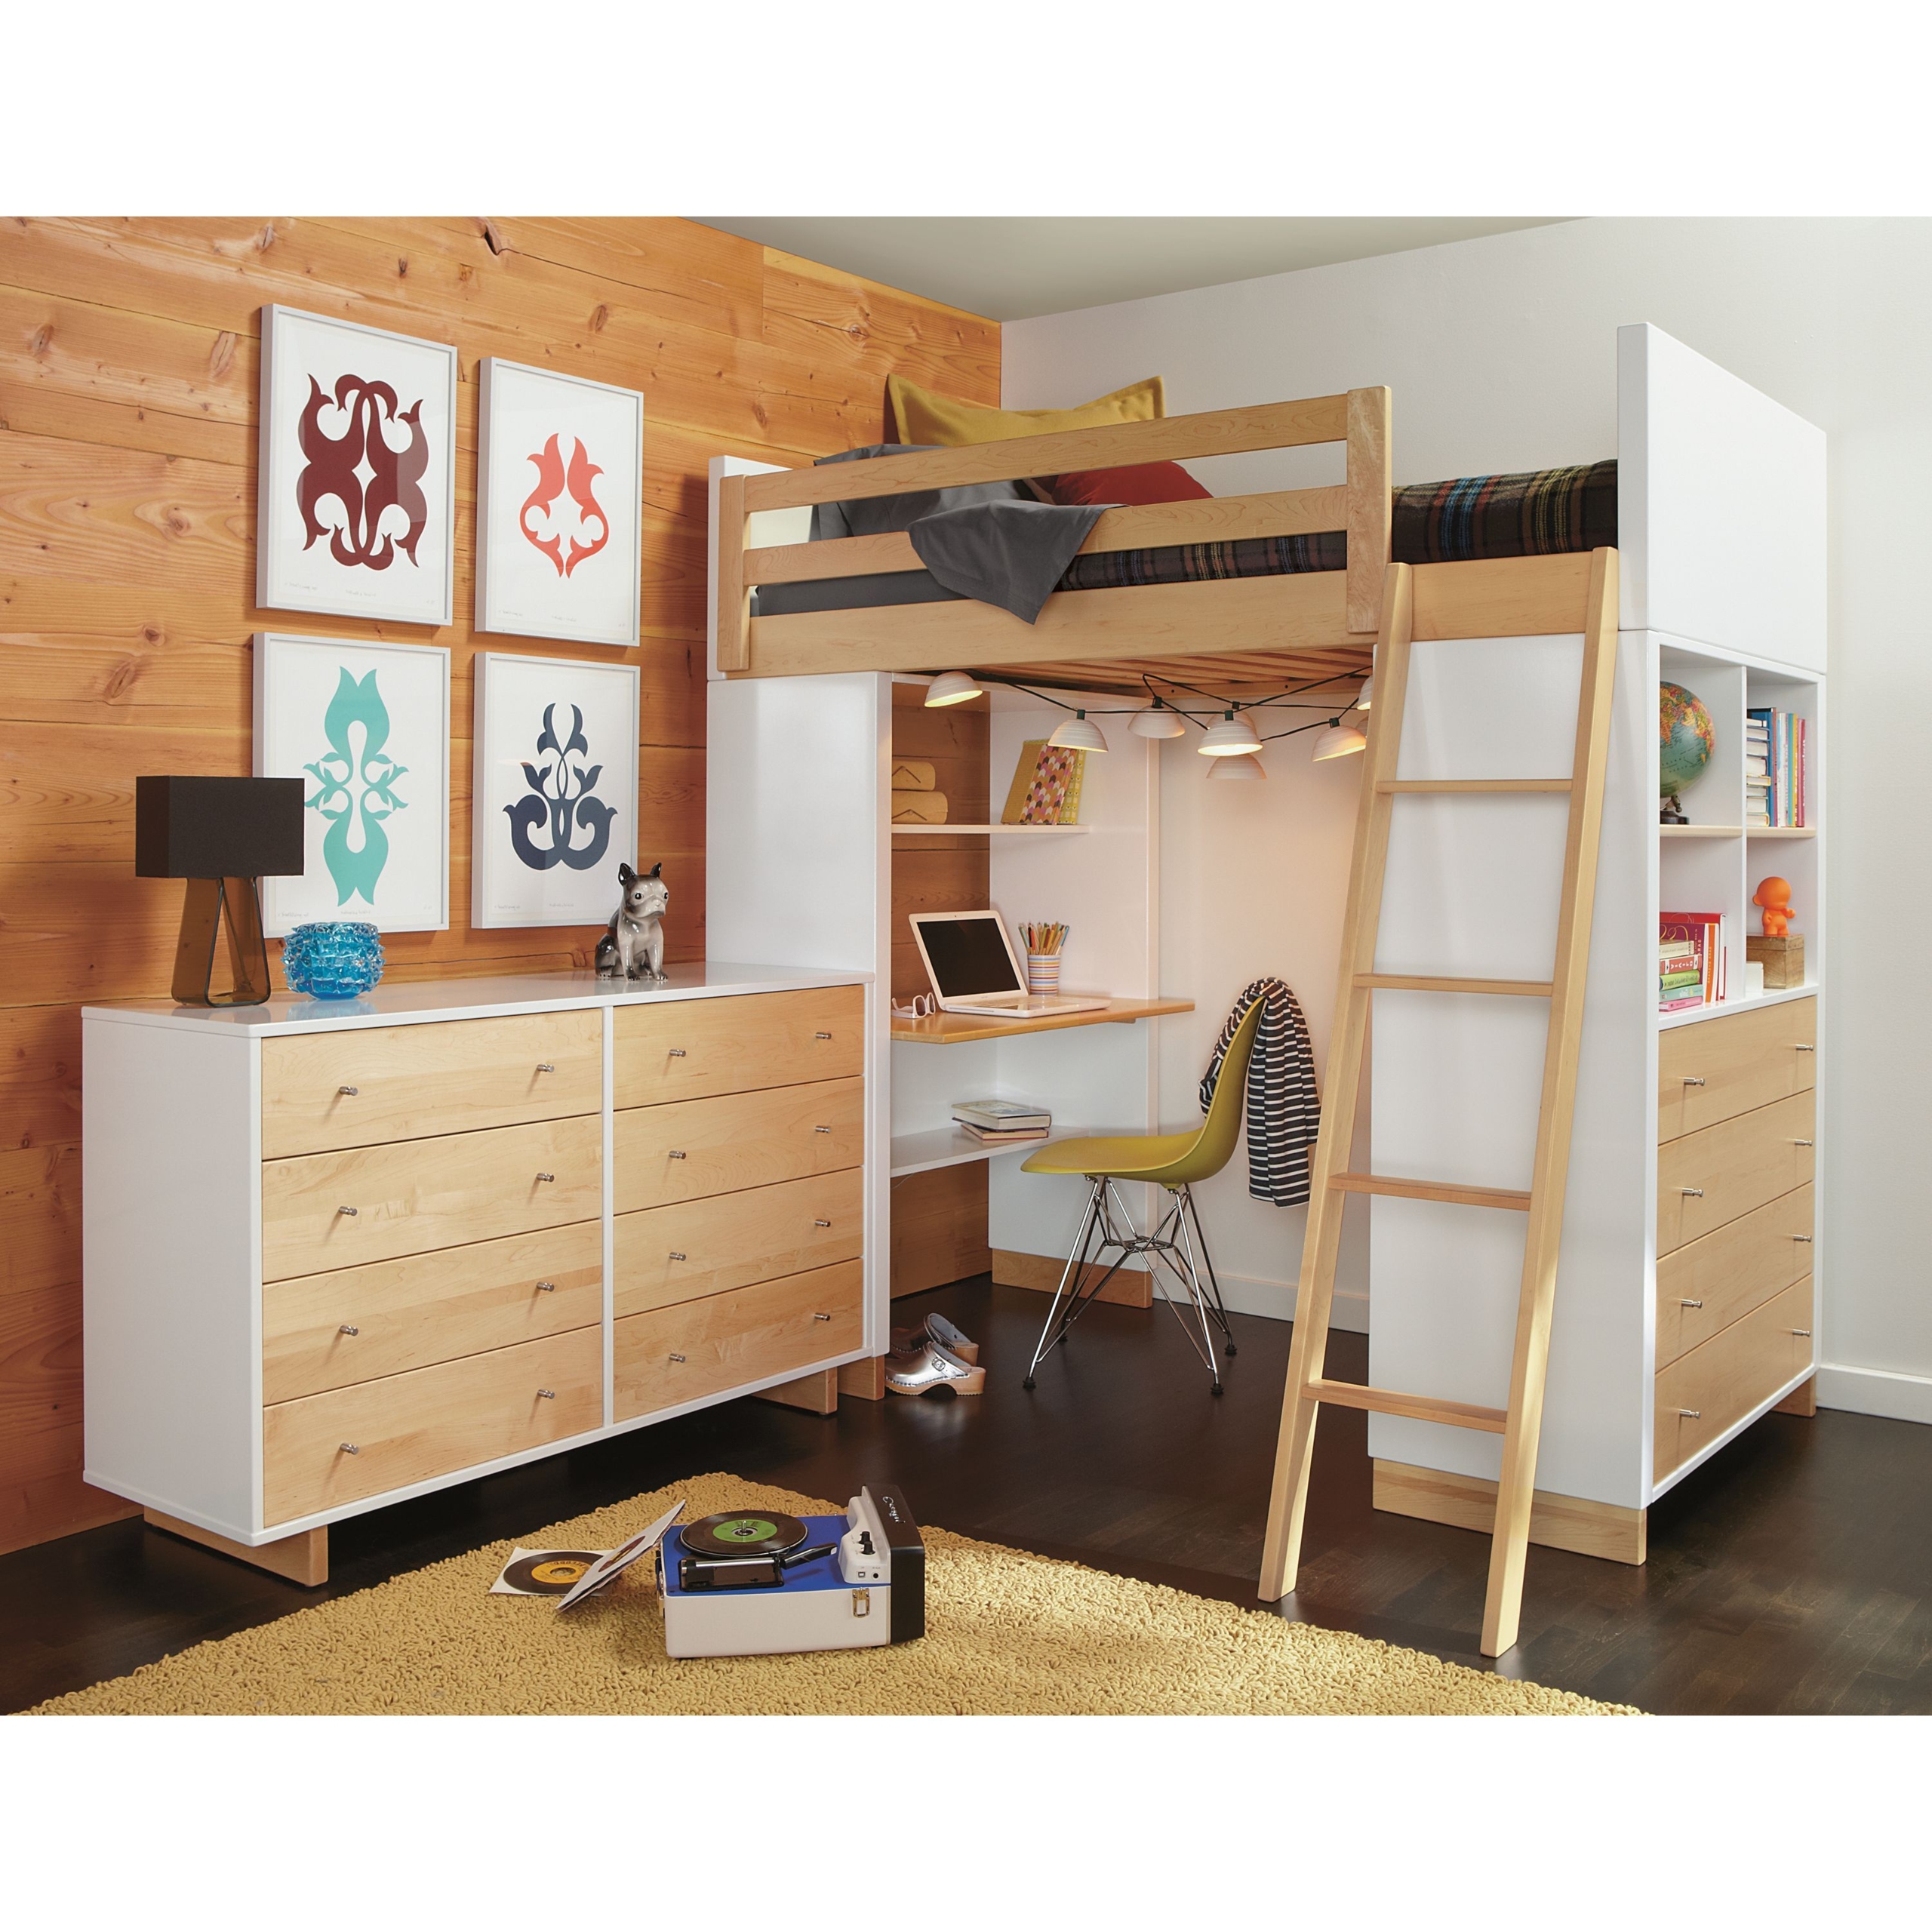 Moda loft bed with desk dresser by r b modern